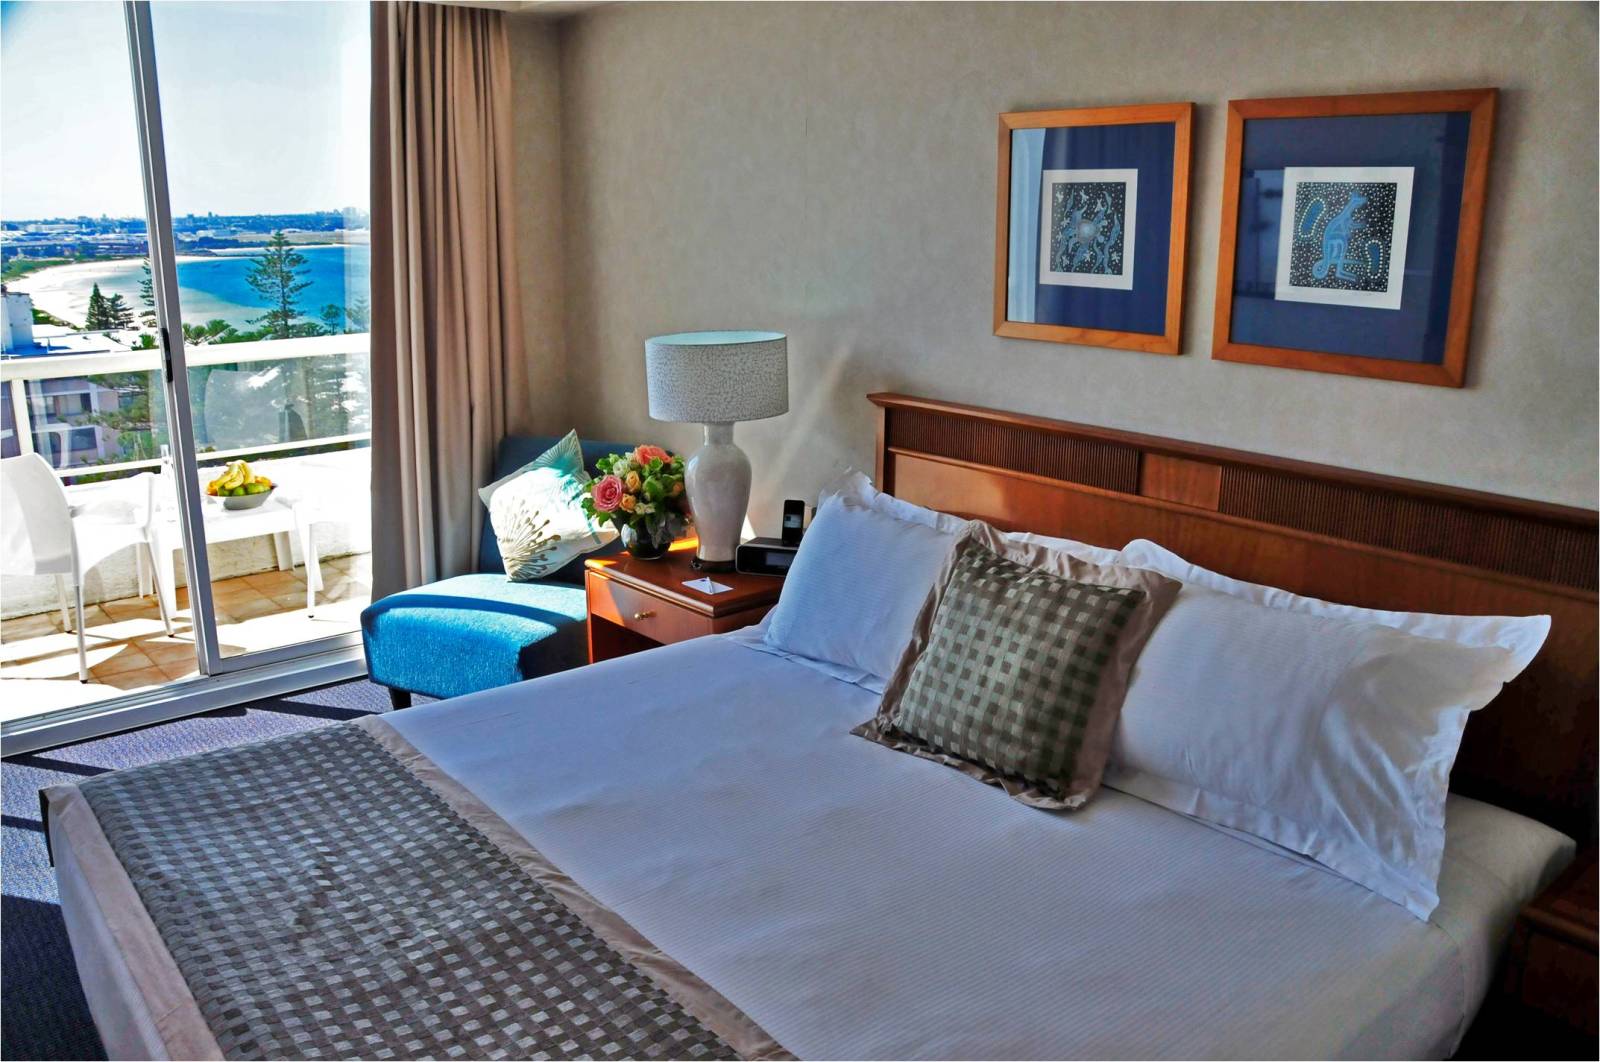 Bayview room at Novotel Sydney Brighton Beach hotel Novotel Sydney Brighton Beach Sydney (02) 9556 5111